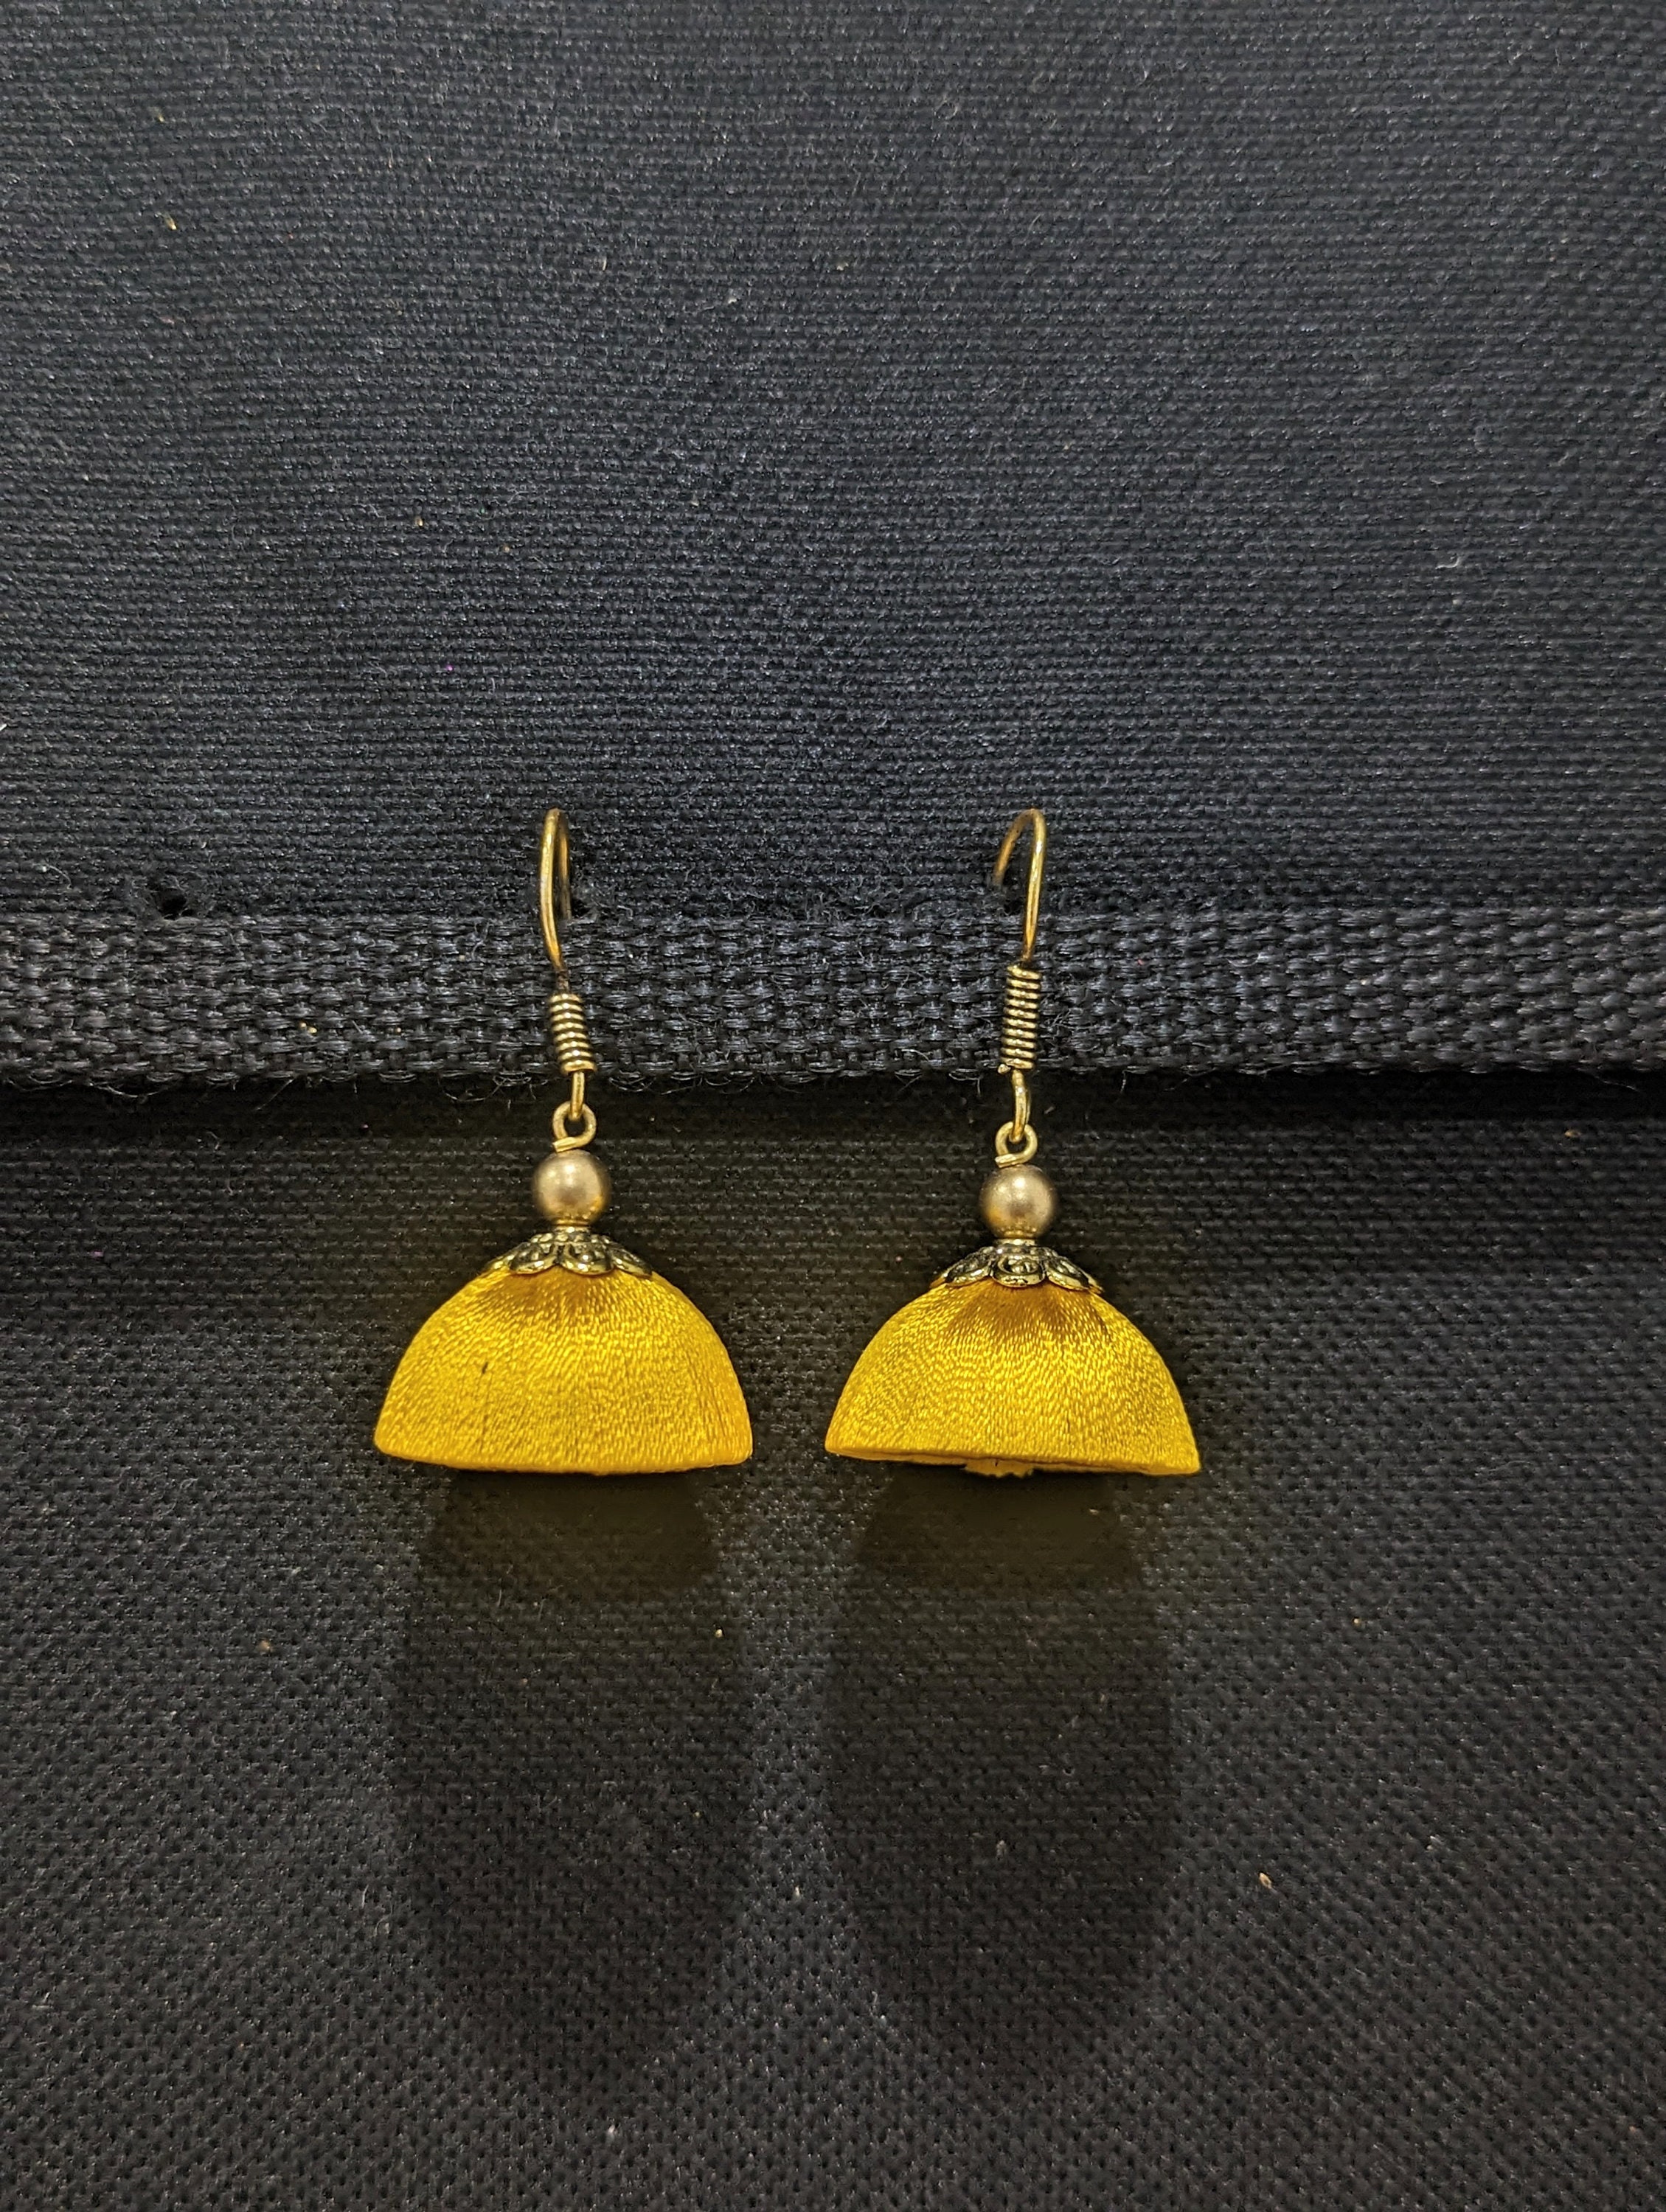 Khandelwalimpex Golden Silk Thread Earrings, Shape: Round at Rs 280/pair in  Jaipur